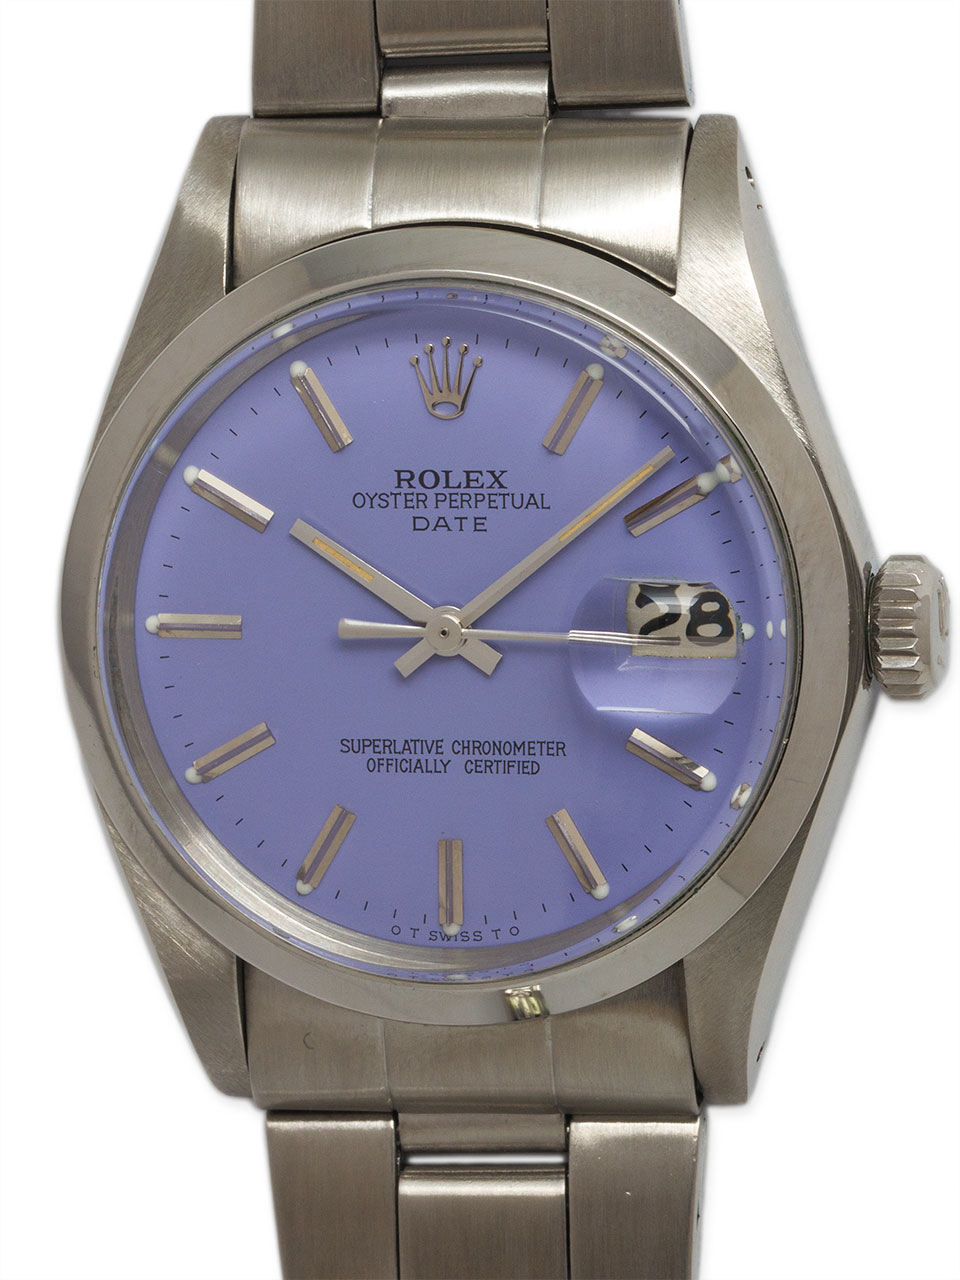 Rolex SS Oyster Perpetual Date circa 1972 "Lavender"